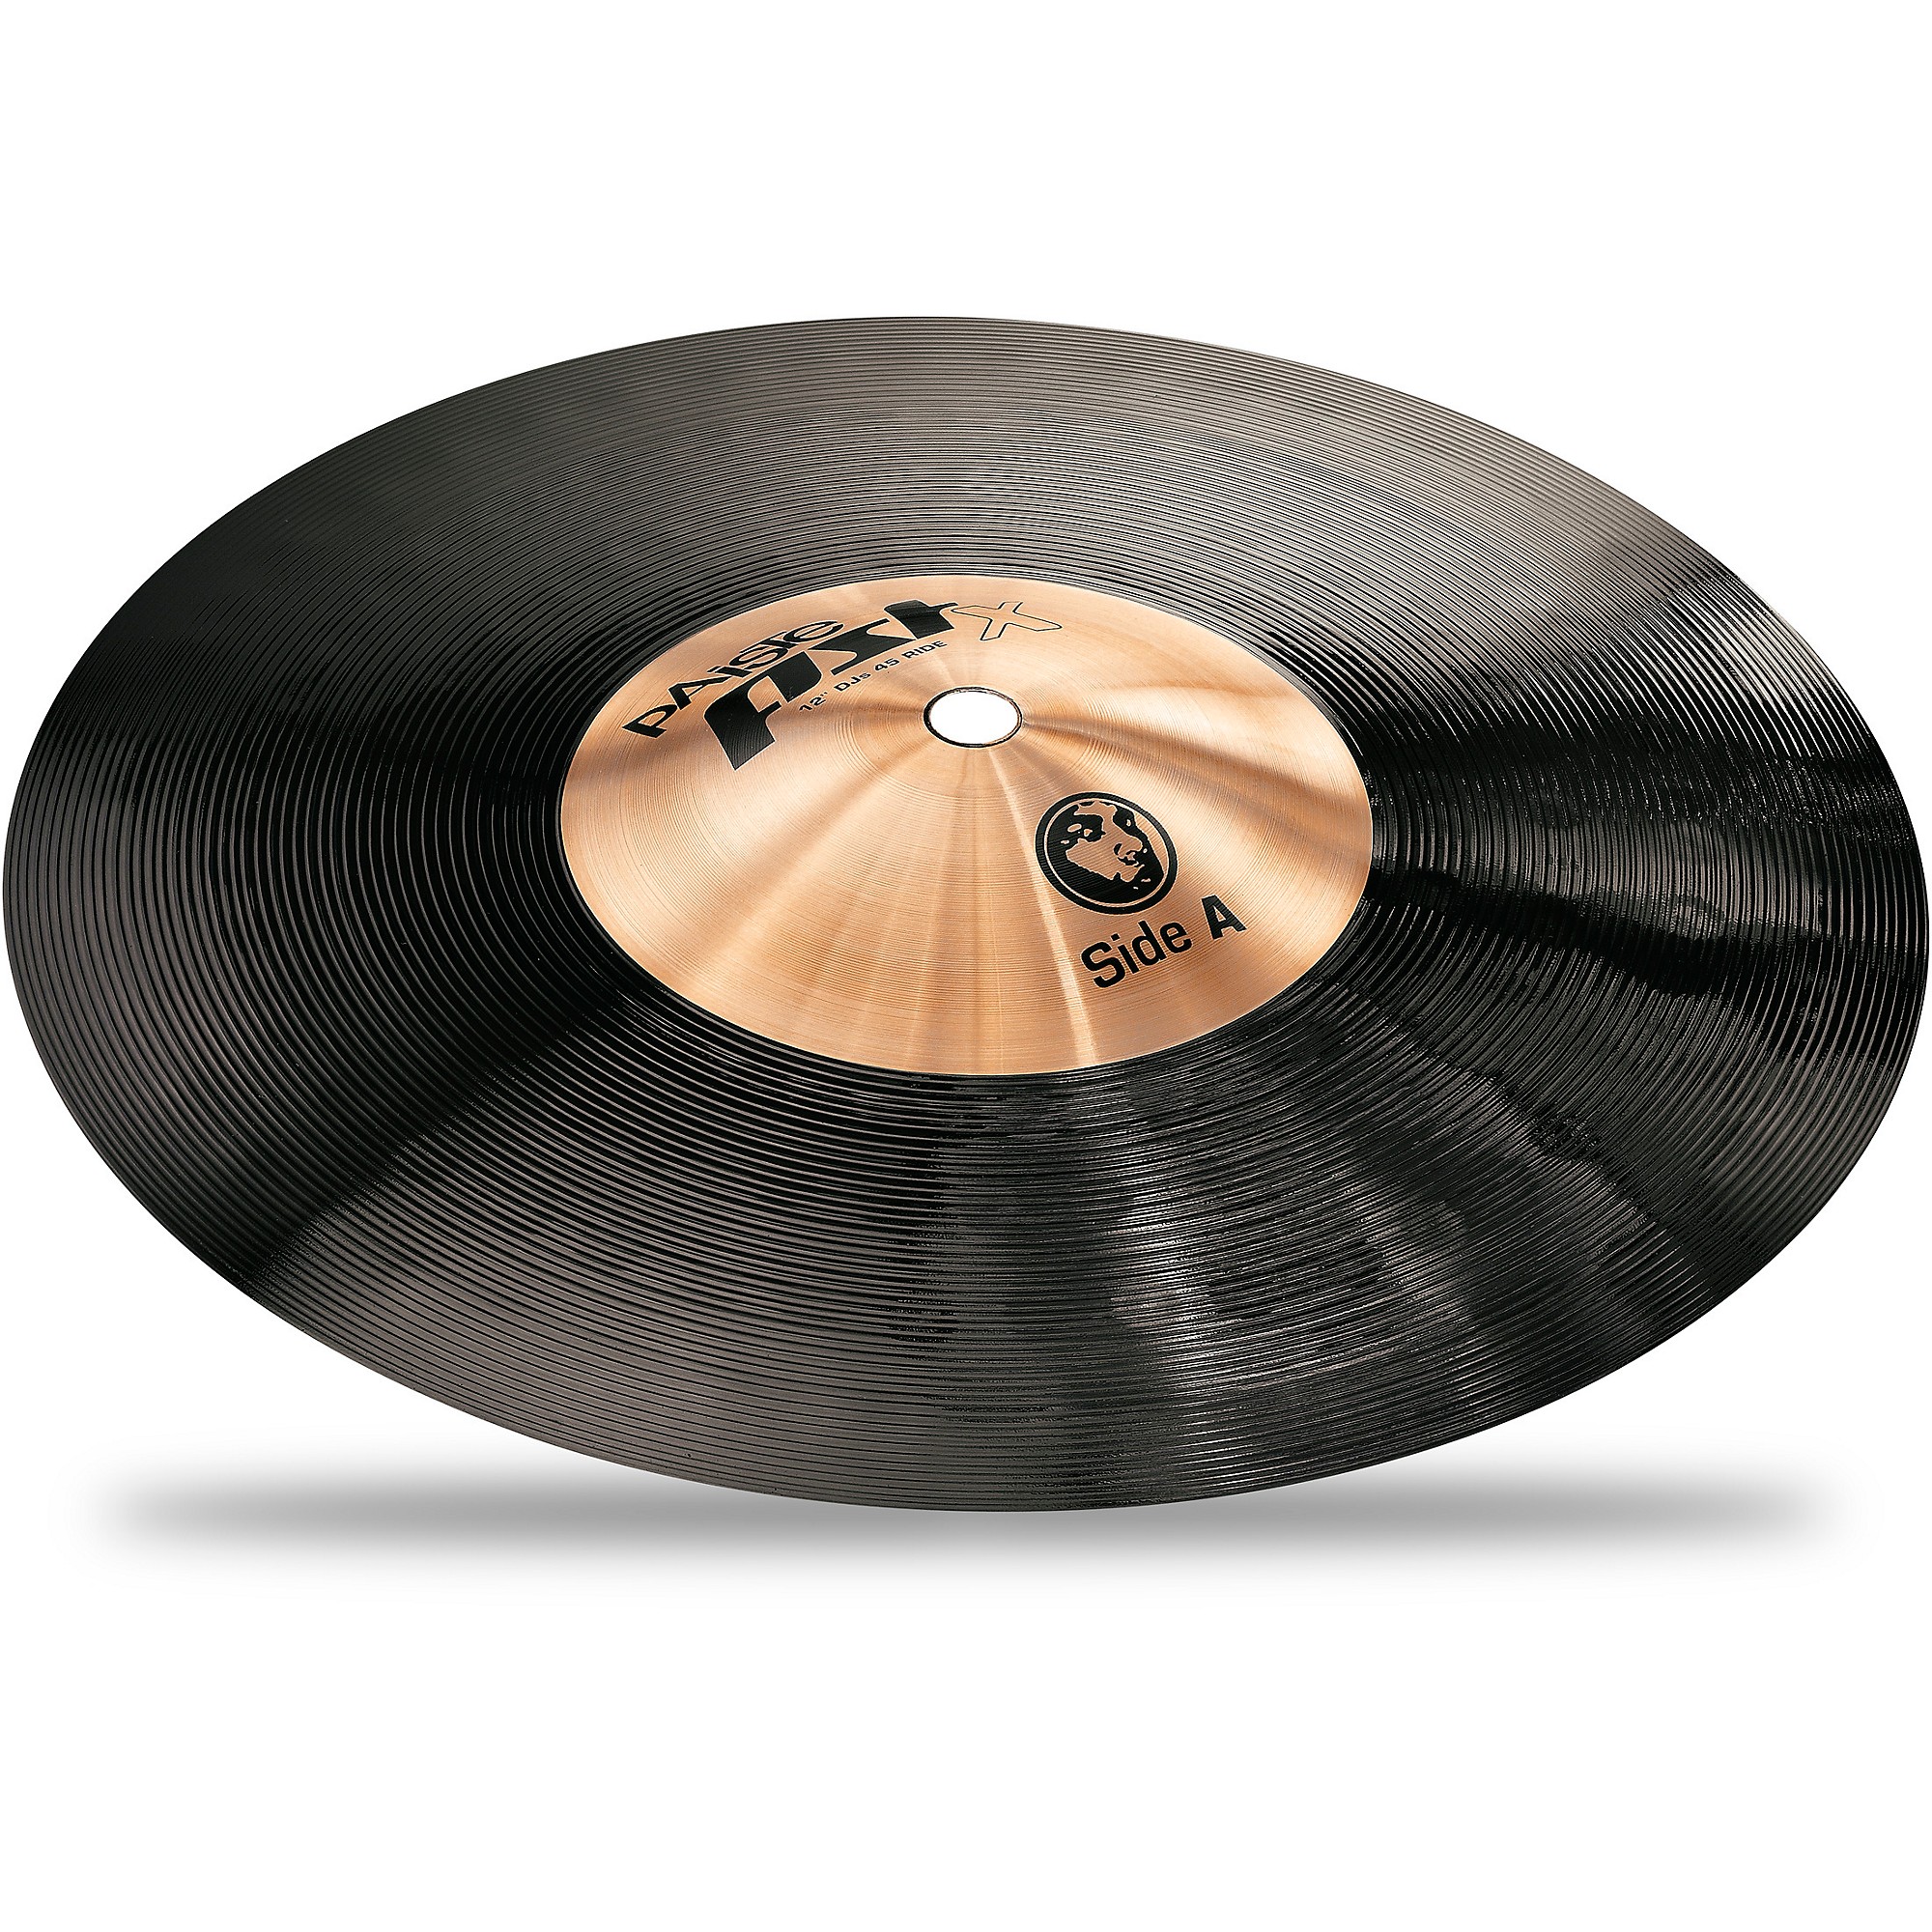 Paiste PSTX DJs 45 Ride Cymbal | Music & Arts